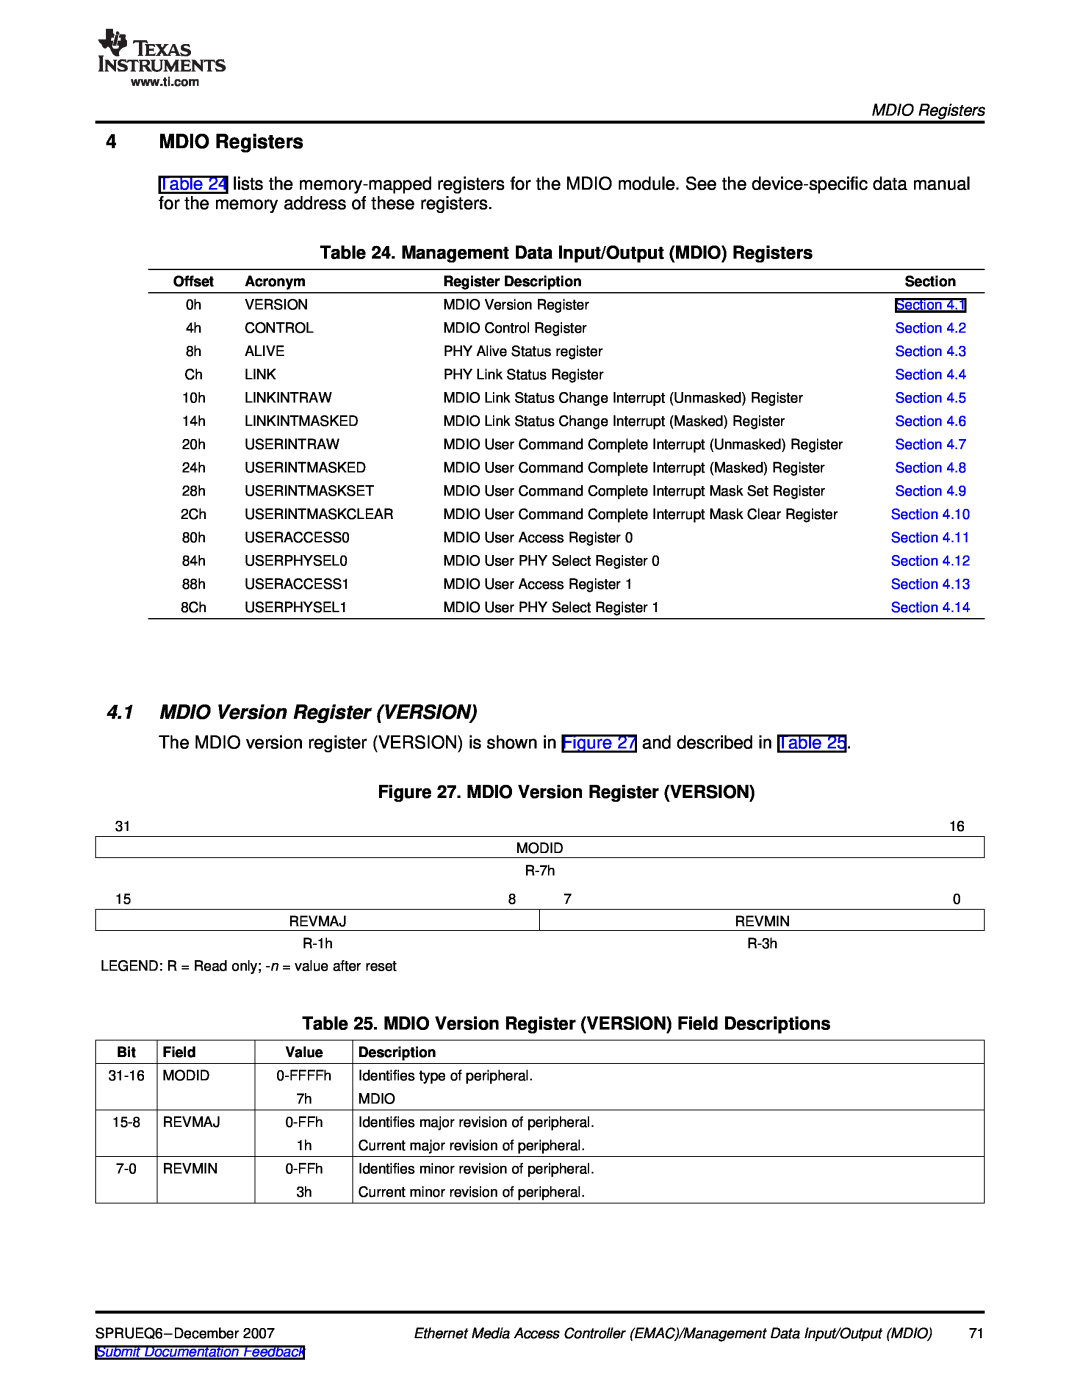 Texas Instruments TMS320DM646x manual MDIO Version Register VERSION, Management Data Input/Output MDIO Registers 